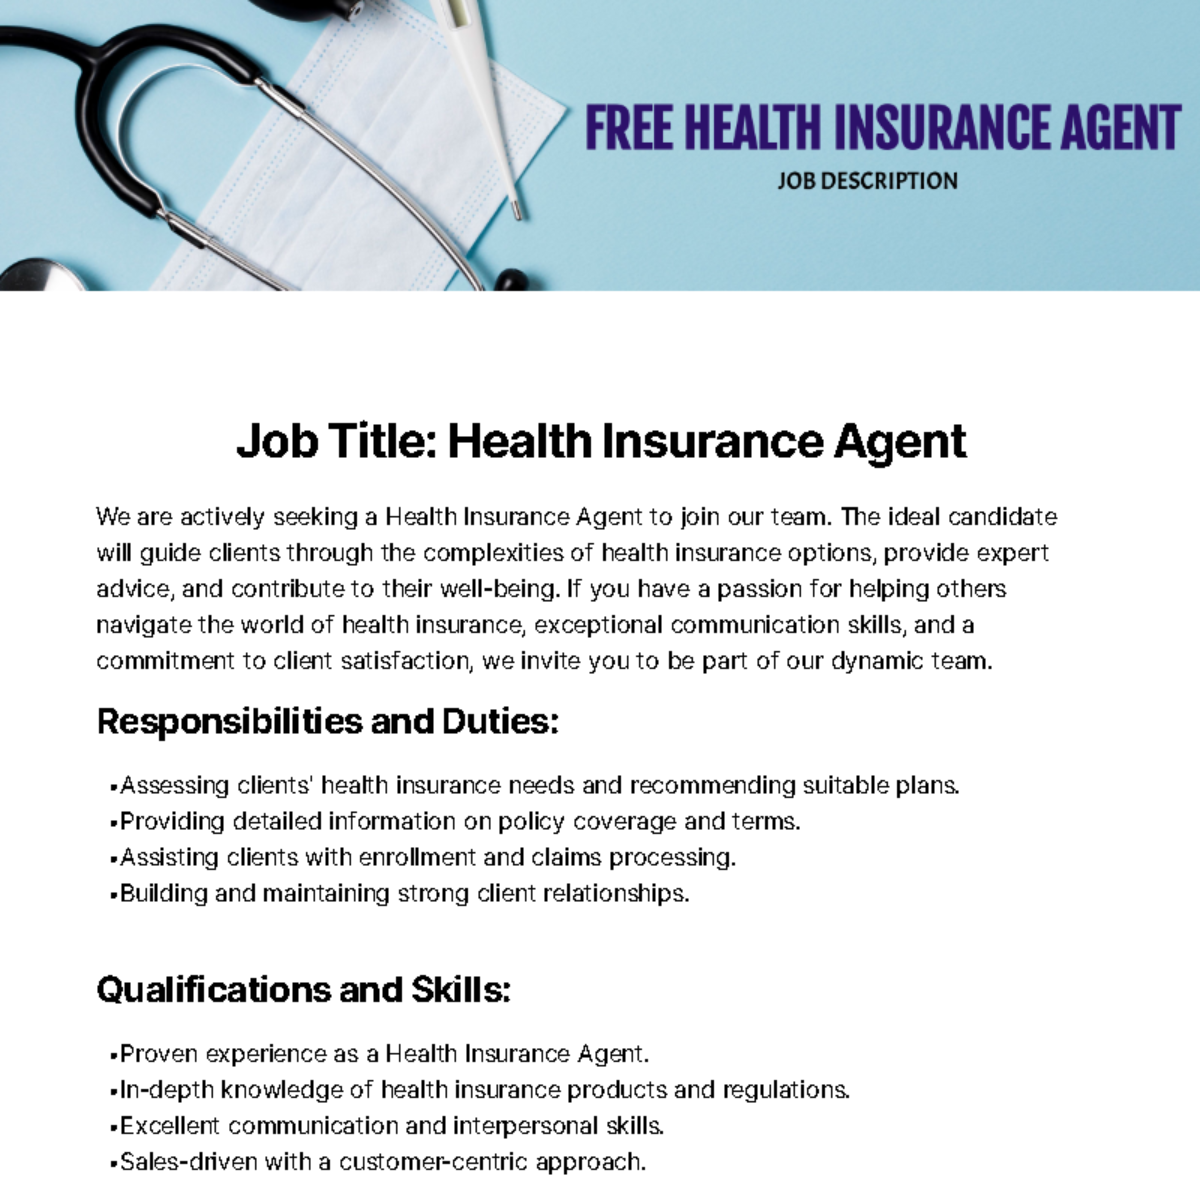 Free Health Insurance Agent Job Description Template